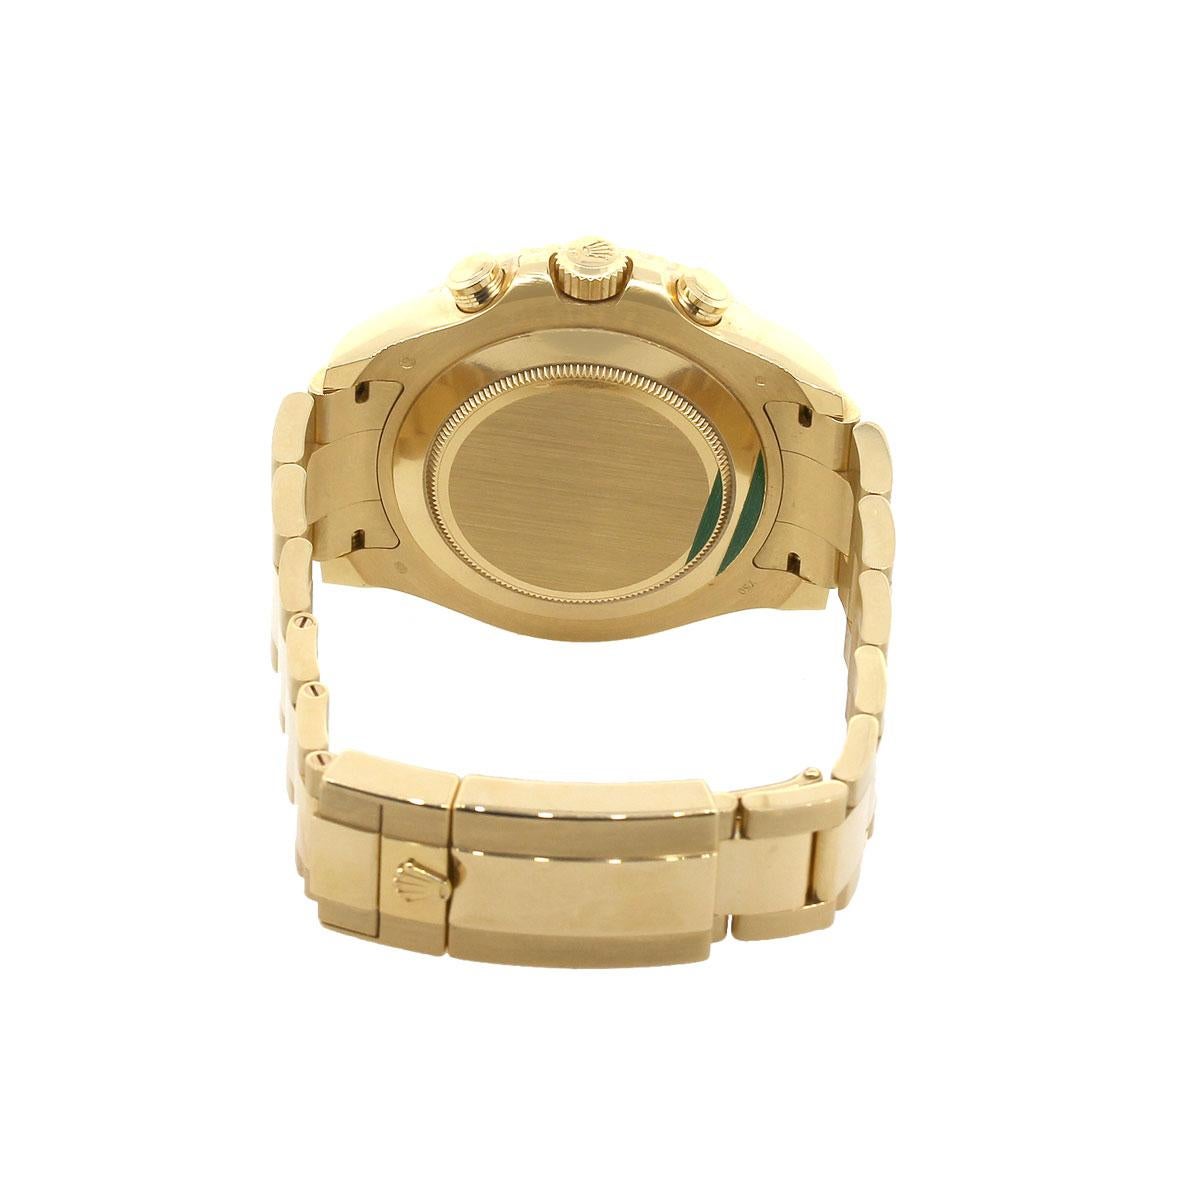 Women's or Men's Rolex 116688 Yacht-Master II White Dial Watch